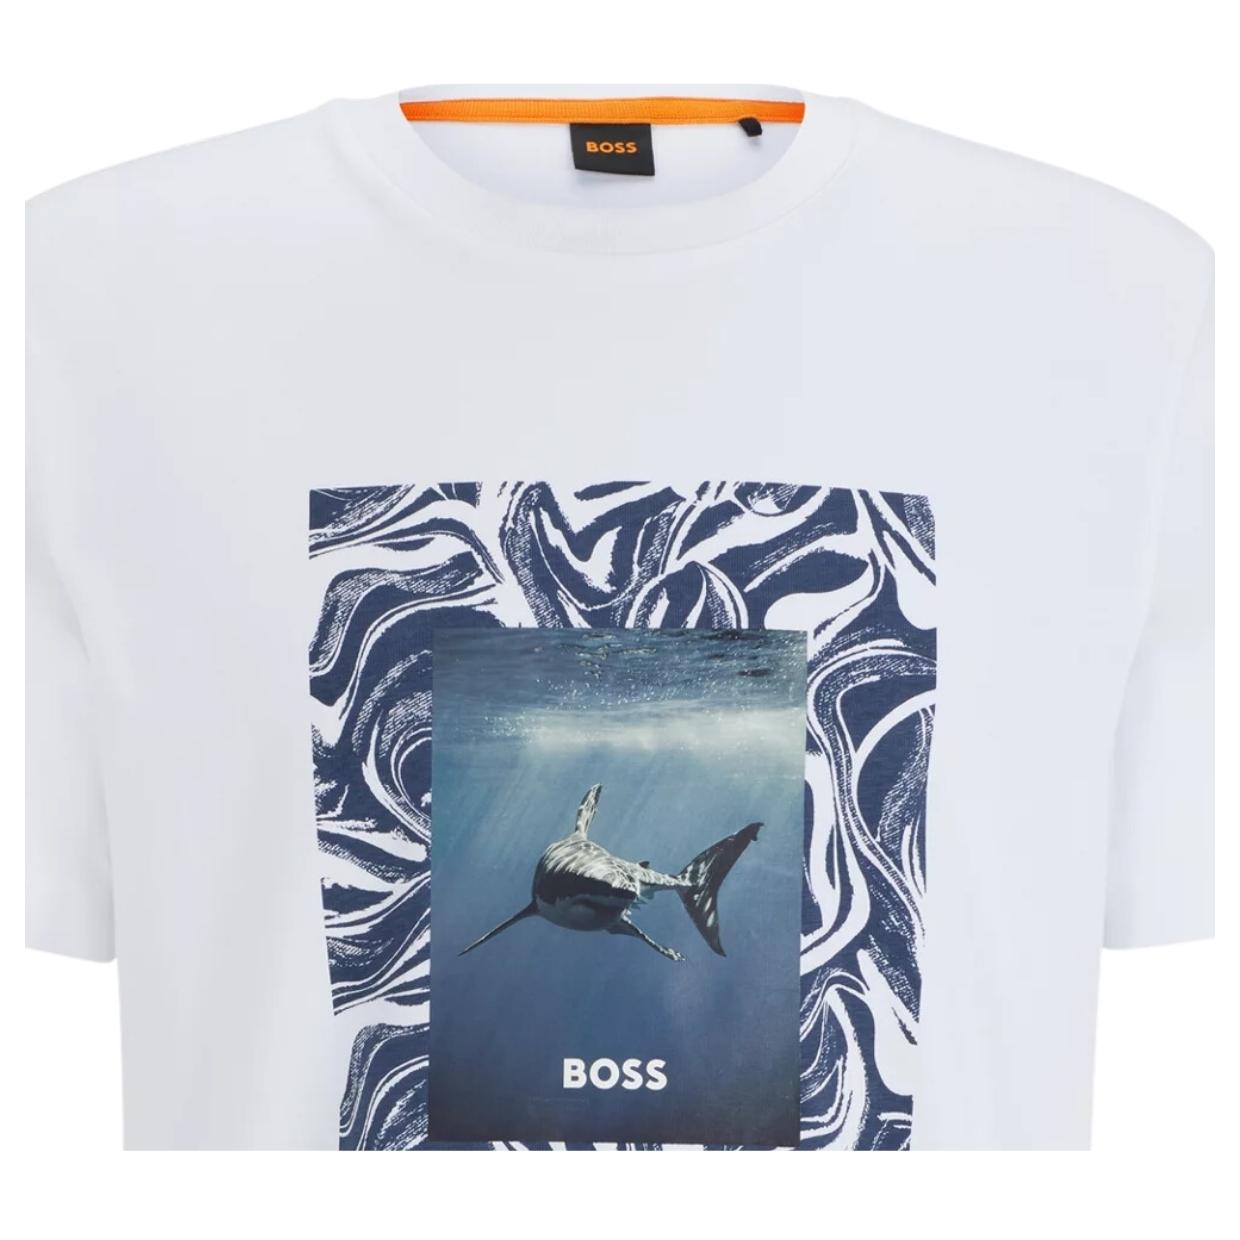 BOSS Print Artwork Te-Tucan White T-Shirt